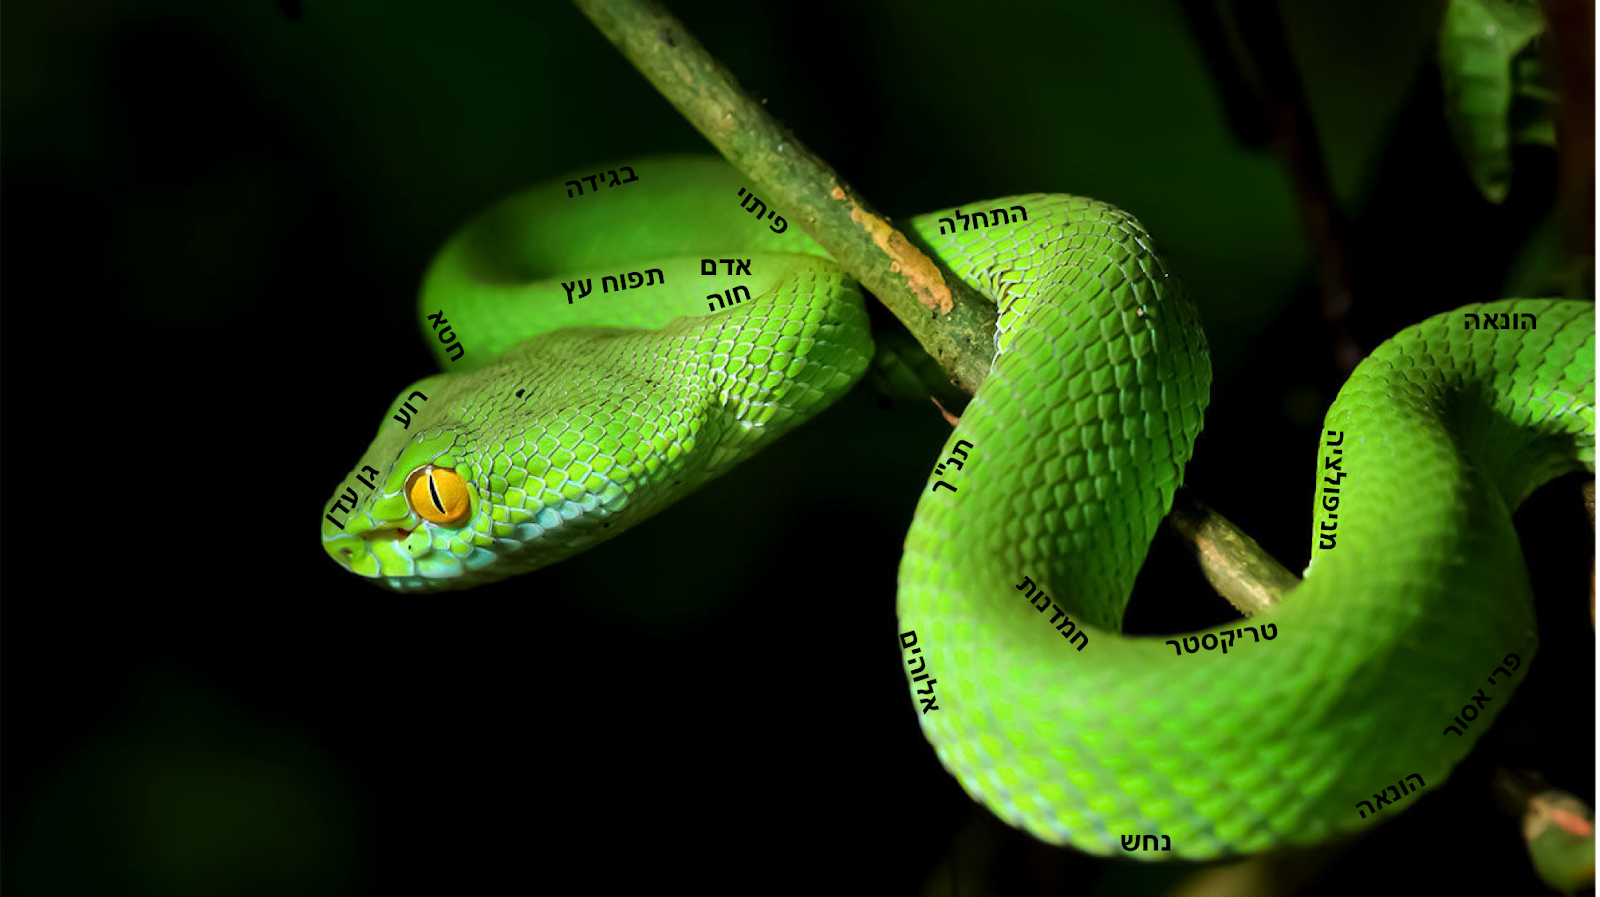 imagemaking: The Serpent